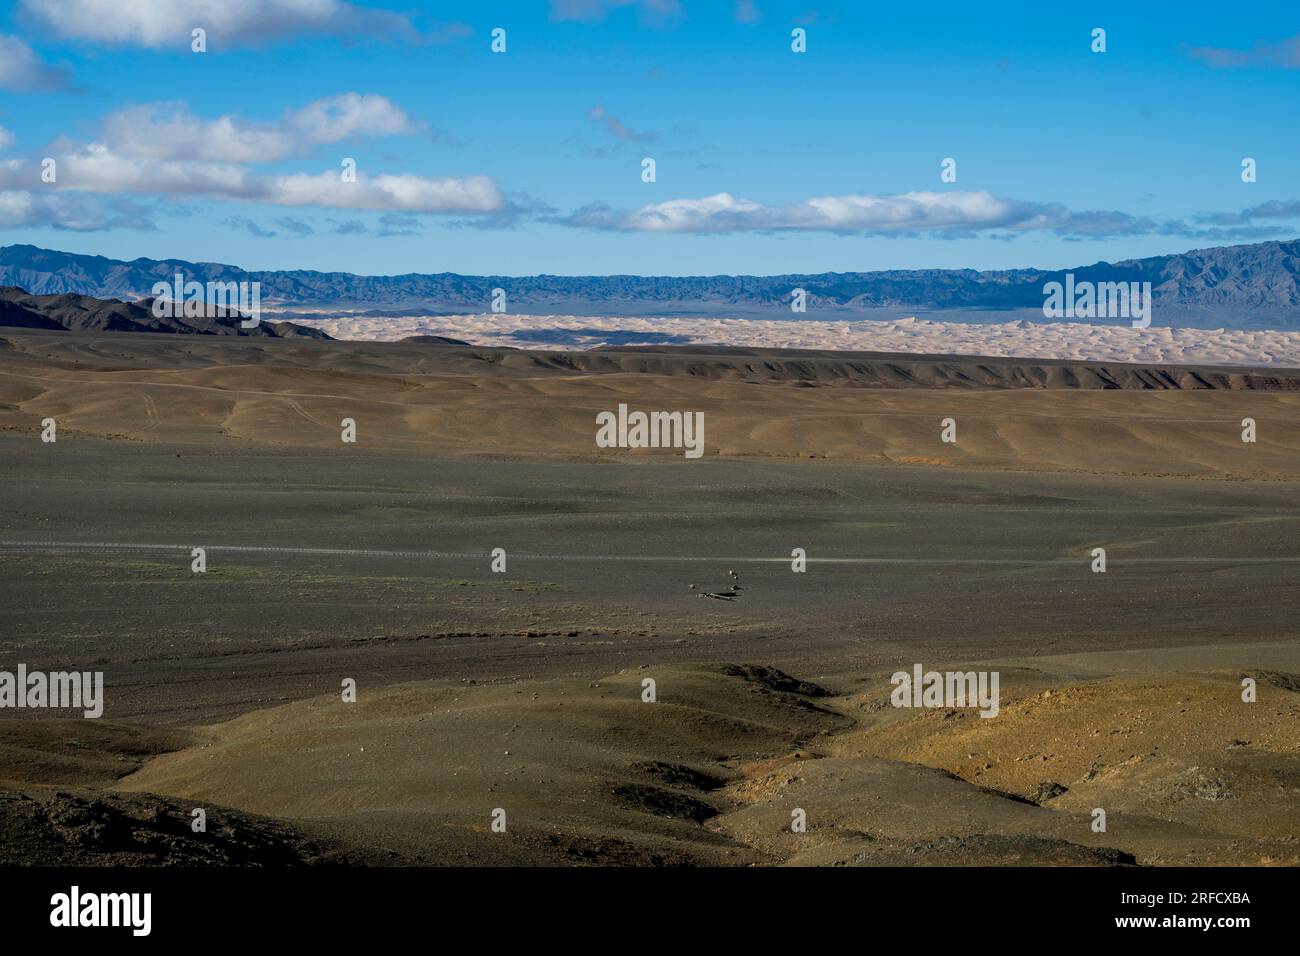 Vista delle dune di sabbia di Hongoryn Els (Khongoryn Els) nel deserto del Gobi, nel Parco nazionale Gobi Gurvansaikhan, nella Mongolia meridionale. Foto Stock